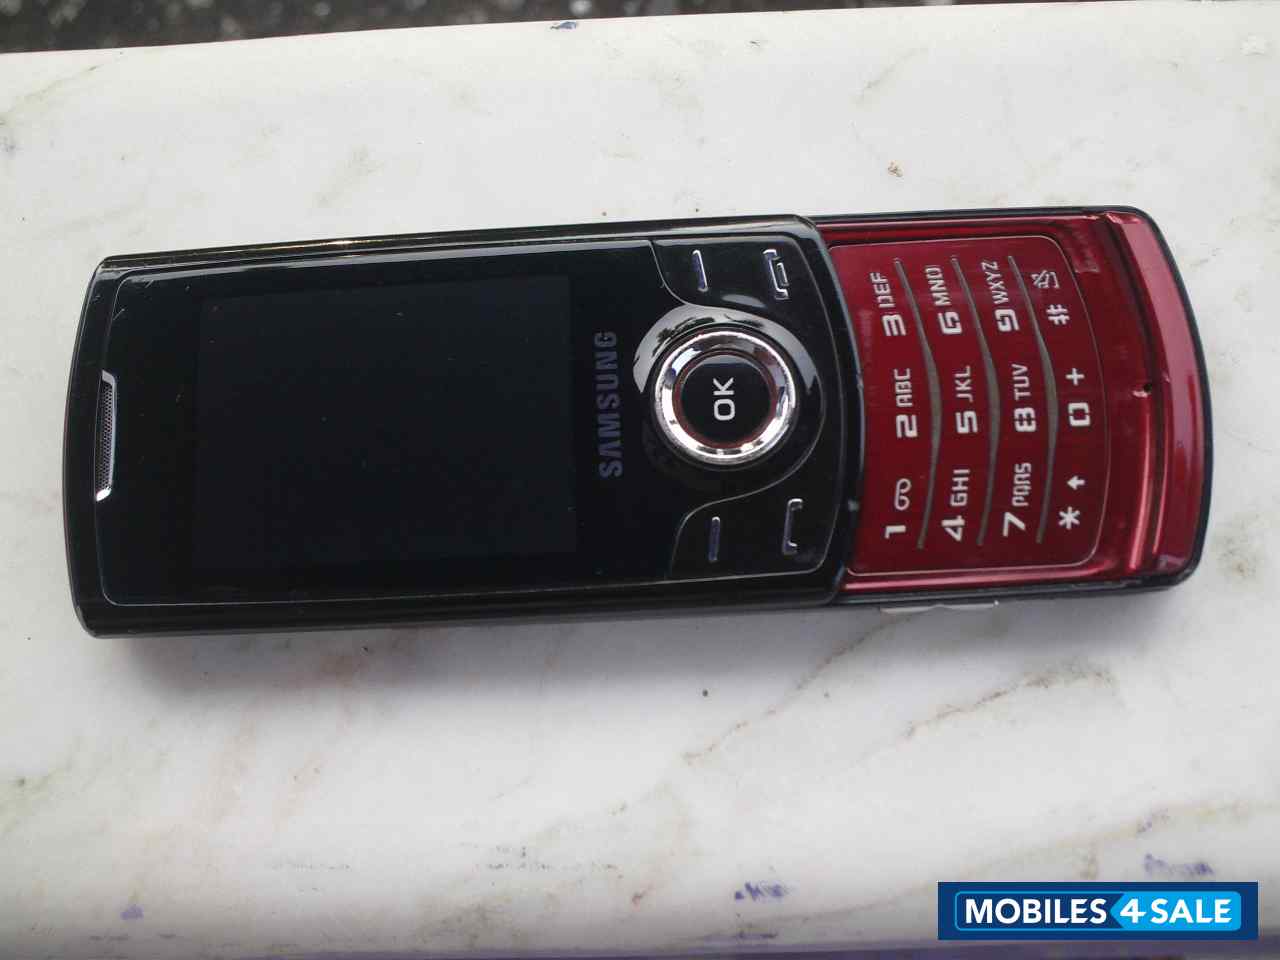 Red/black Samsung Metro 5200